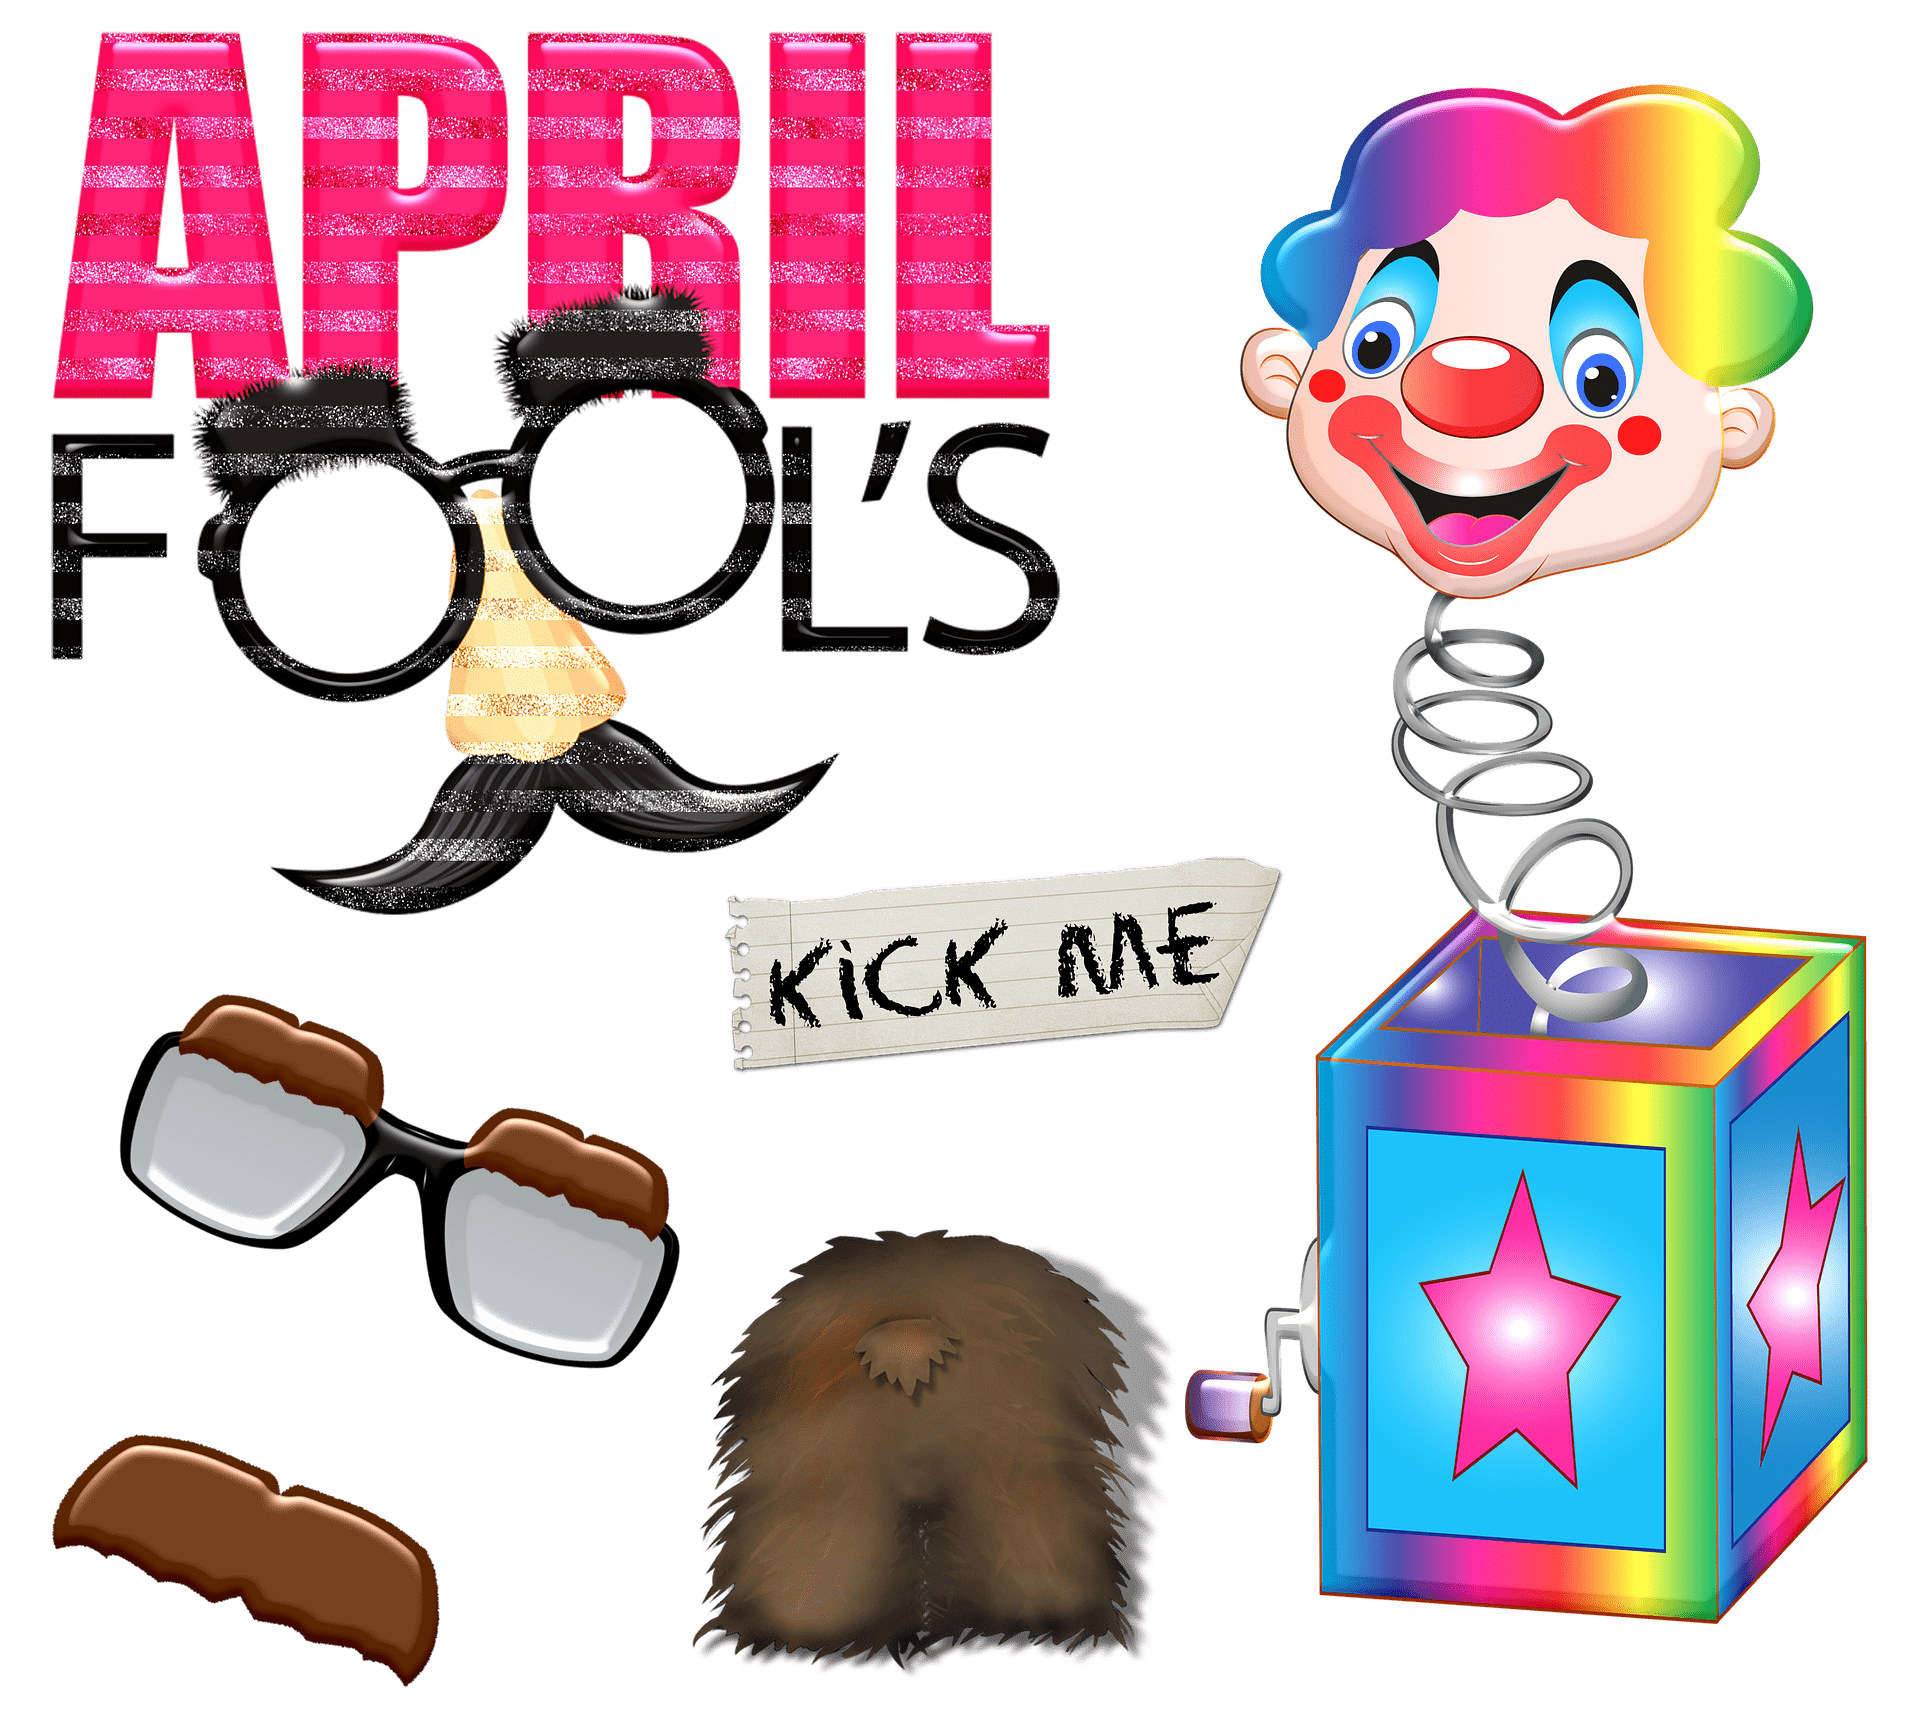 April Fool's Joke Day | Source: Pixabay